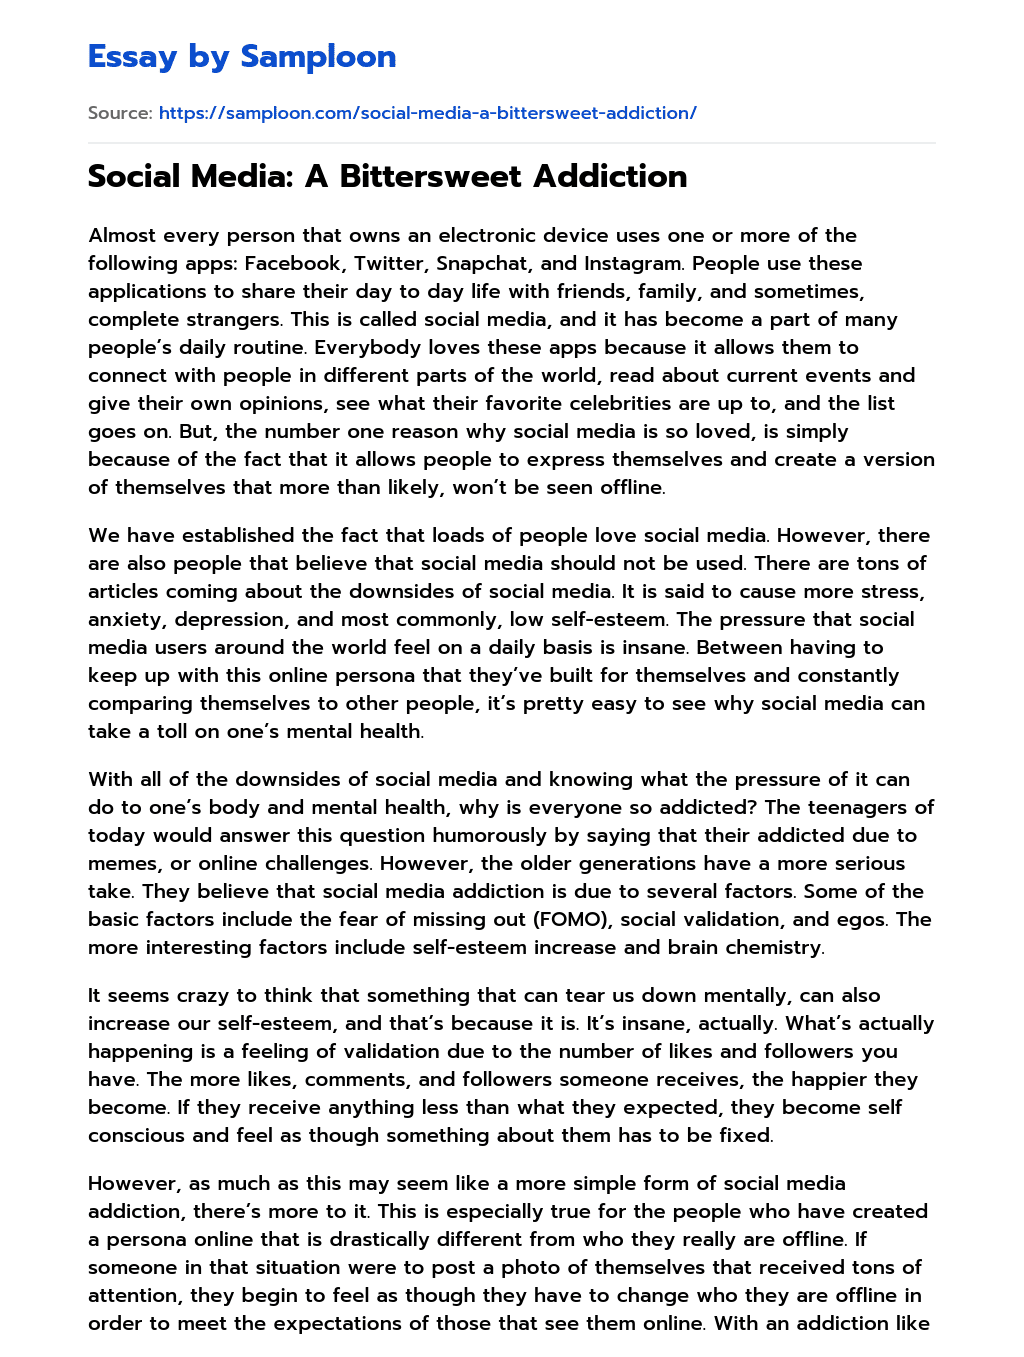 Social Media: A Bittersweet Addiction essay